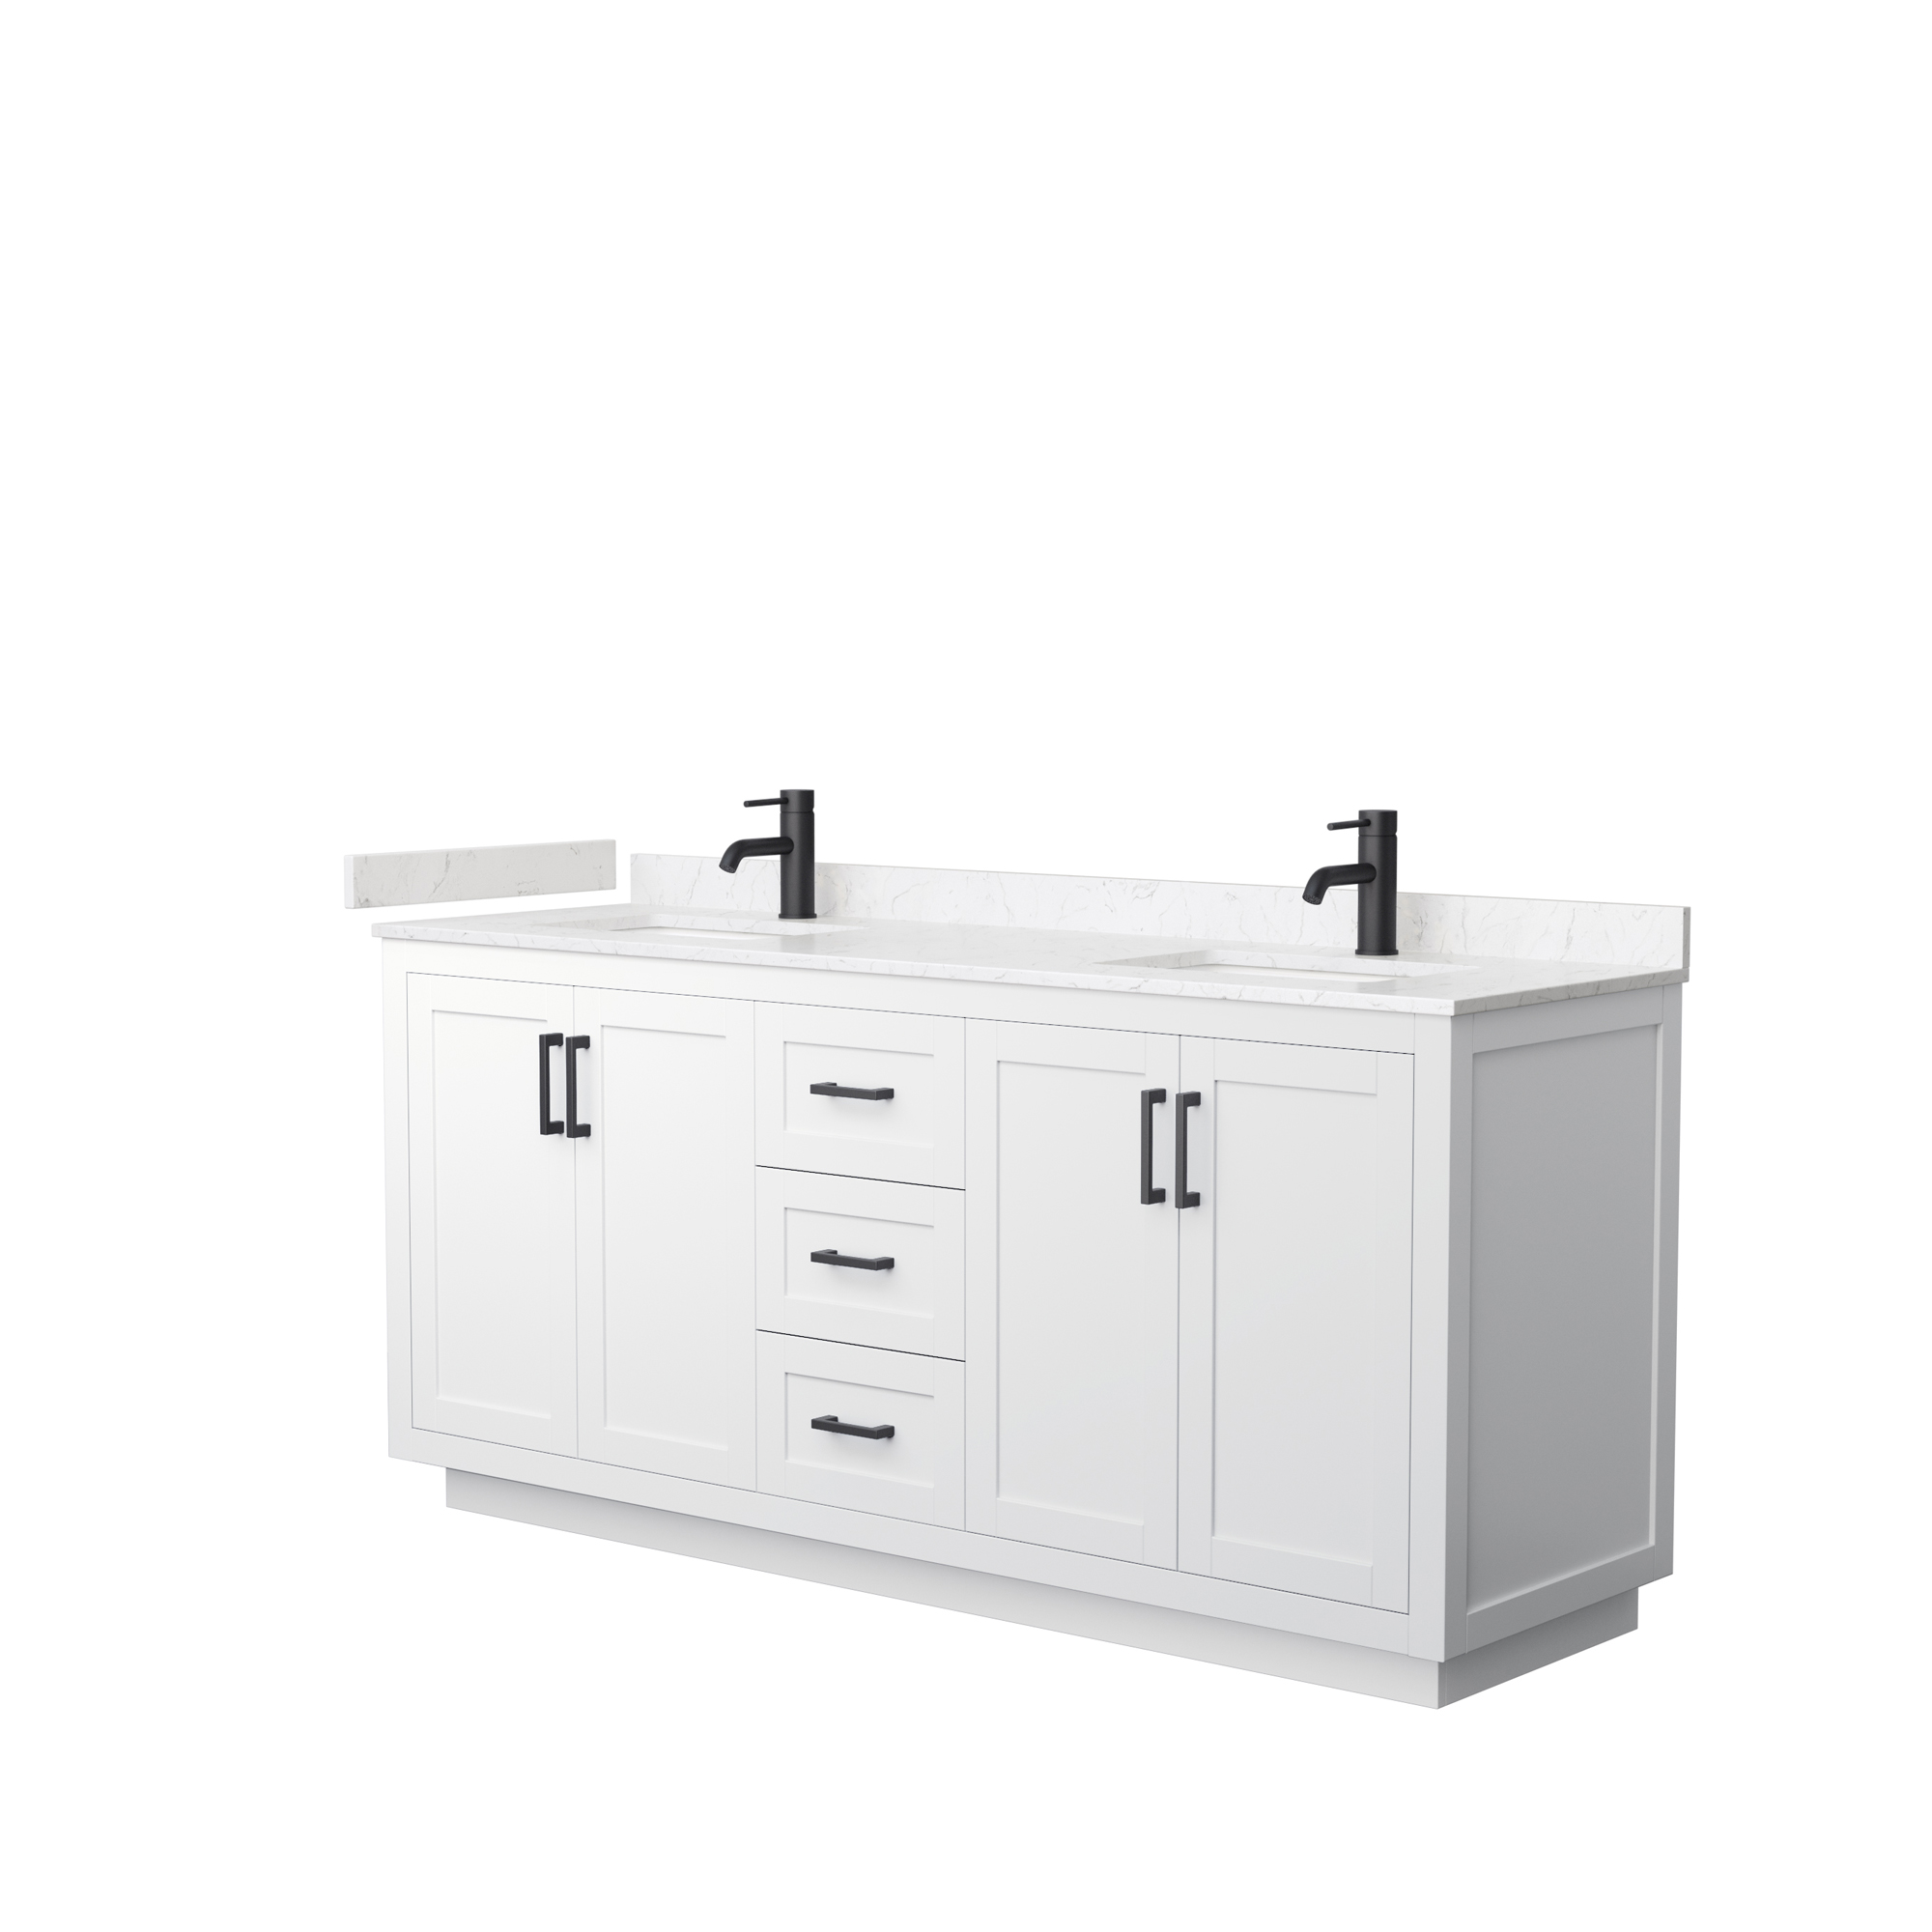 72" Double Bathroom Vanity in White, Light-Vein Carrara Cultured Marble Countertop, Undermount Square Sinks, Matte Black Trim